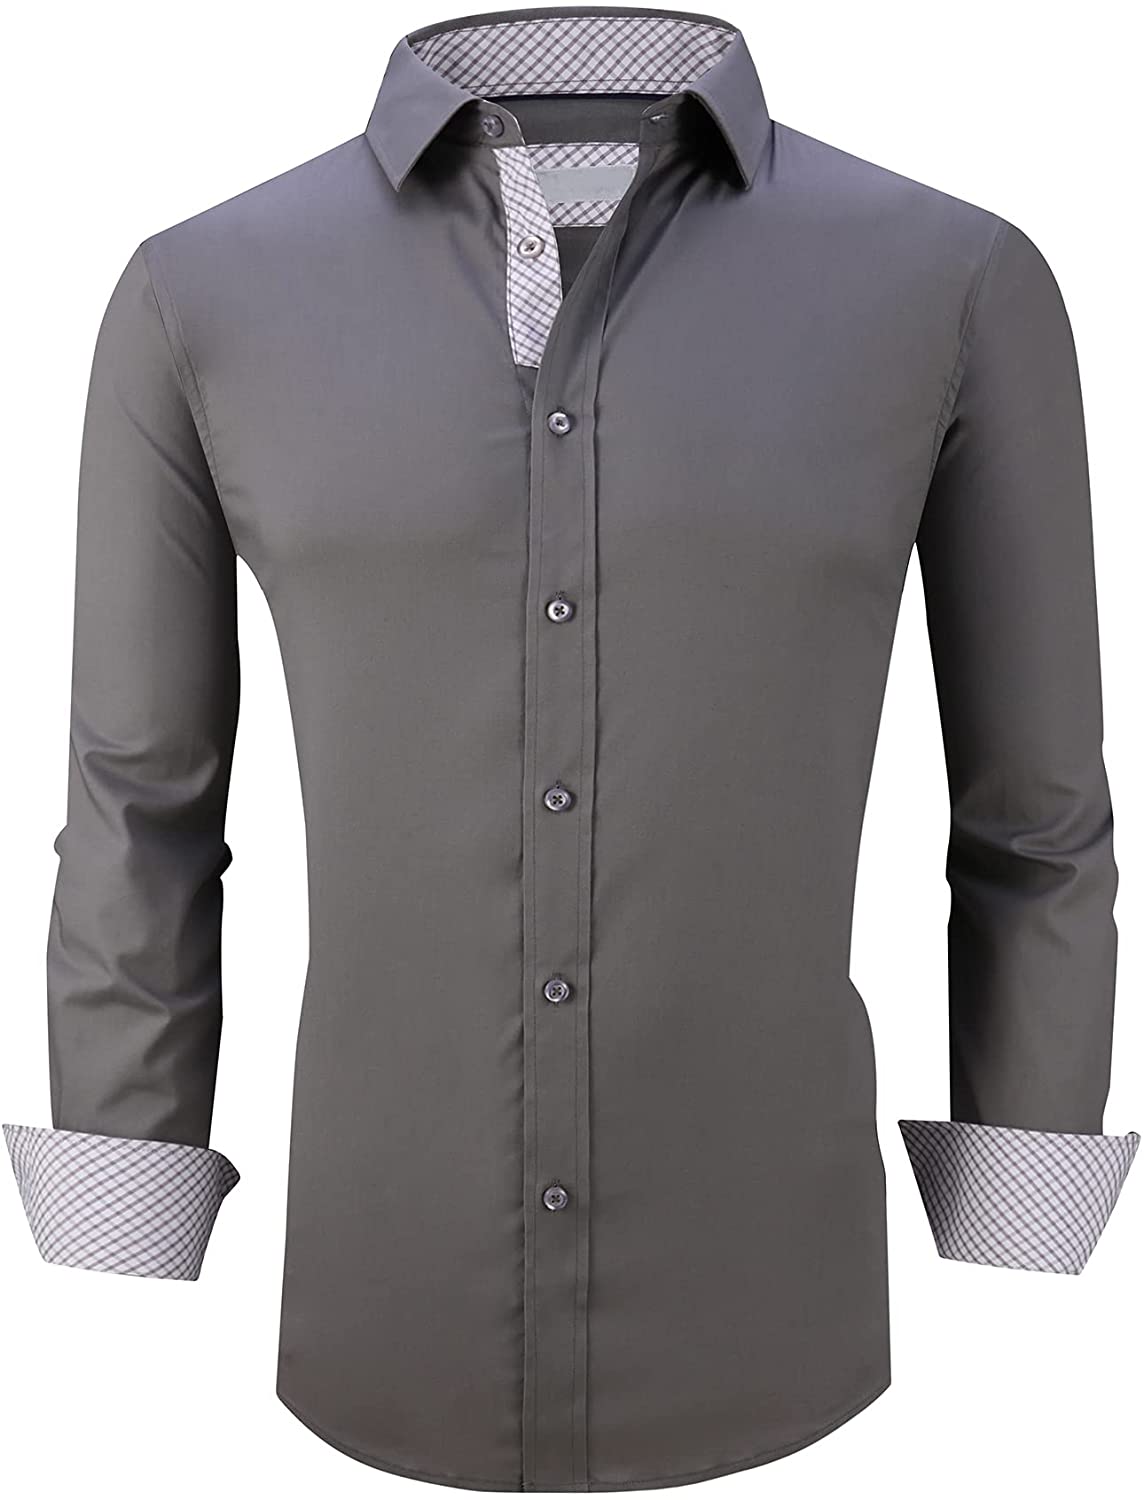 FANCIER Mens Dress Shirts Long Sleeve Regular Fit,Mens Button Down Long Sleeve Shirts Fashion Easy Care